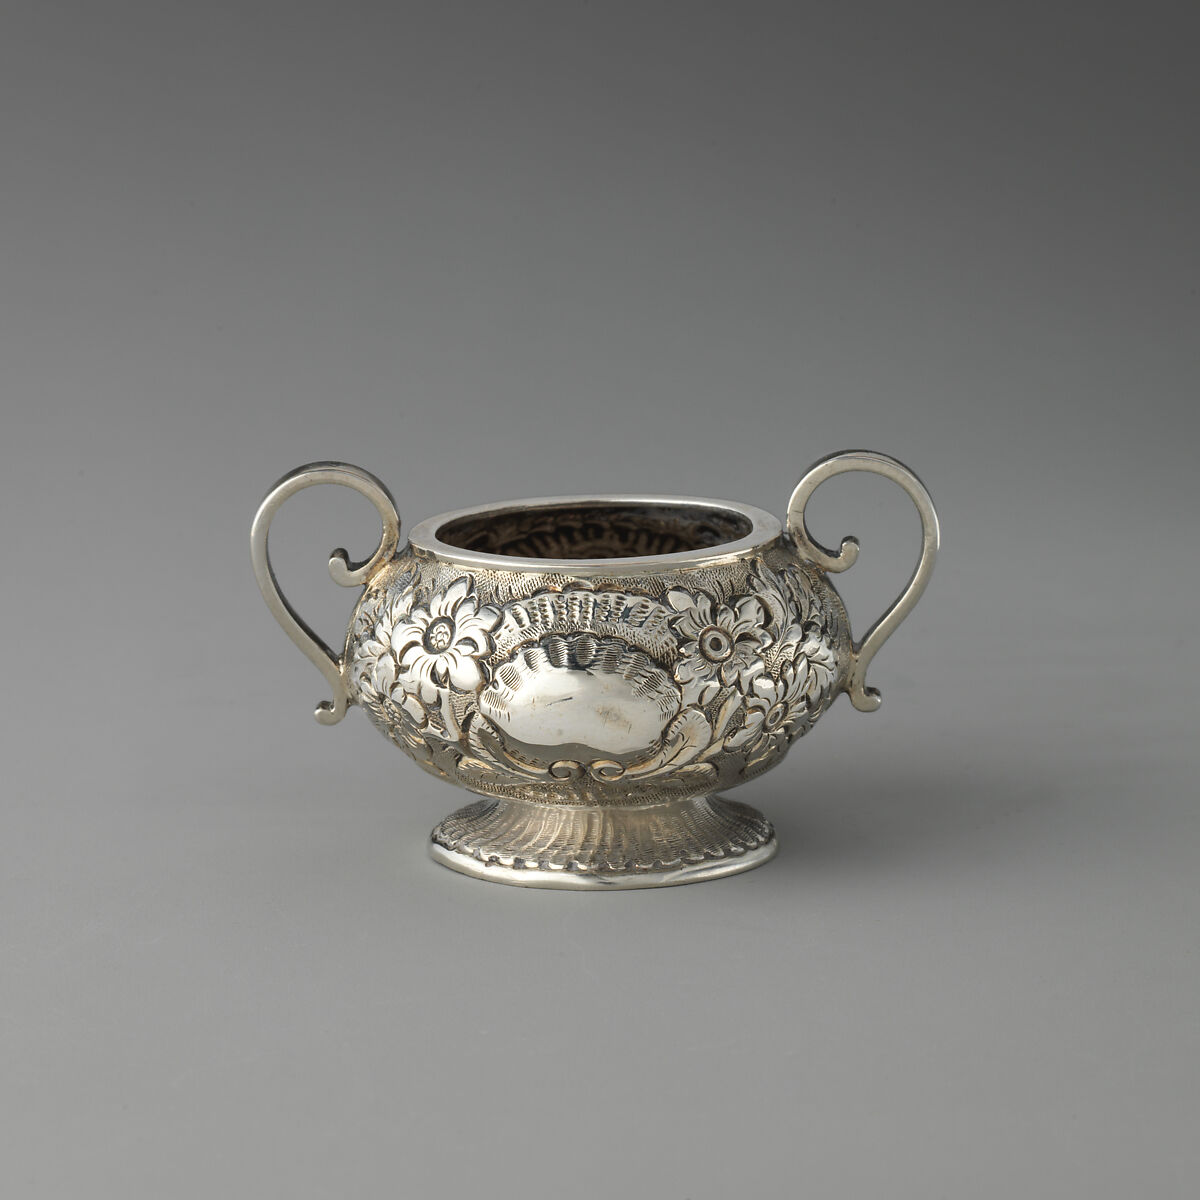 Miniature sugar bowl (part of a set), Henry Flavelle, Silver, Irish, Dublin 